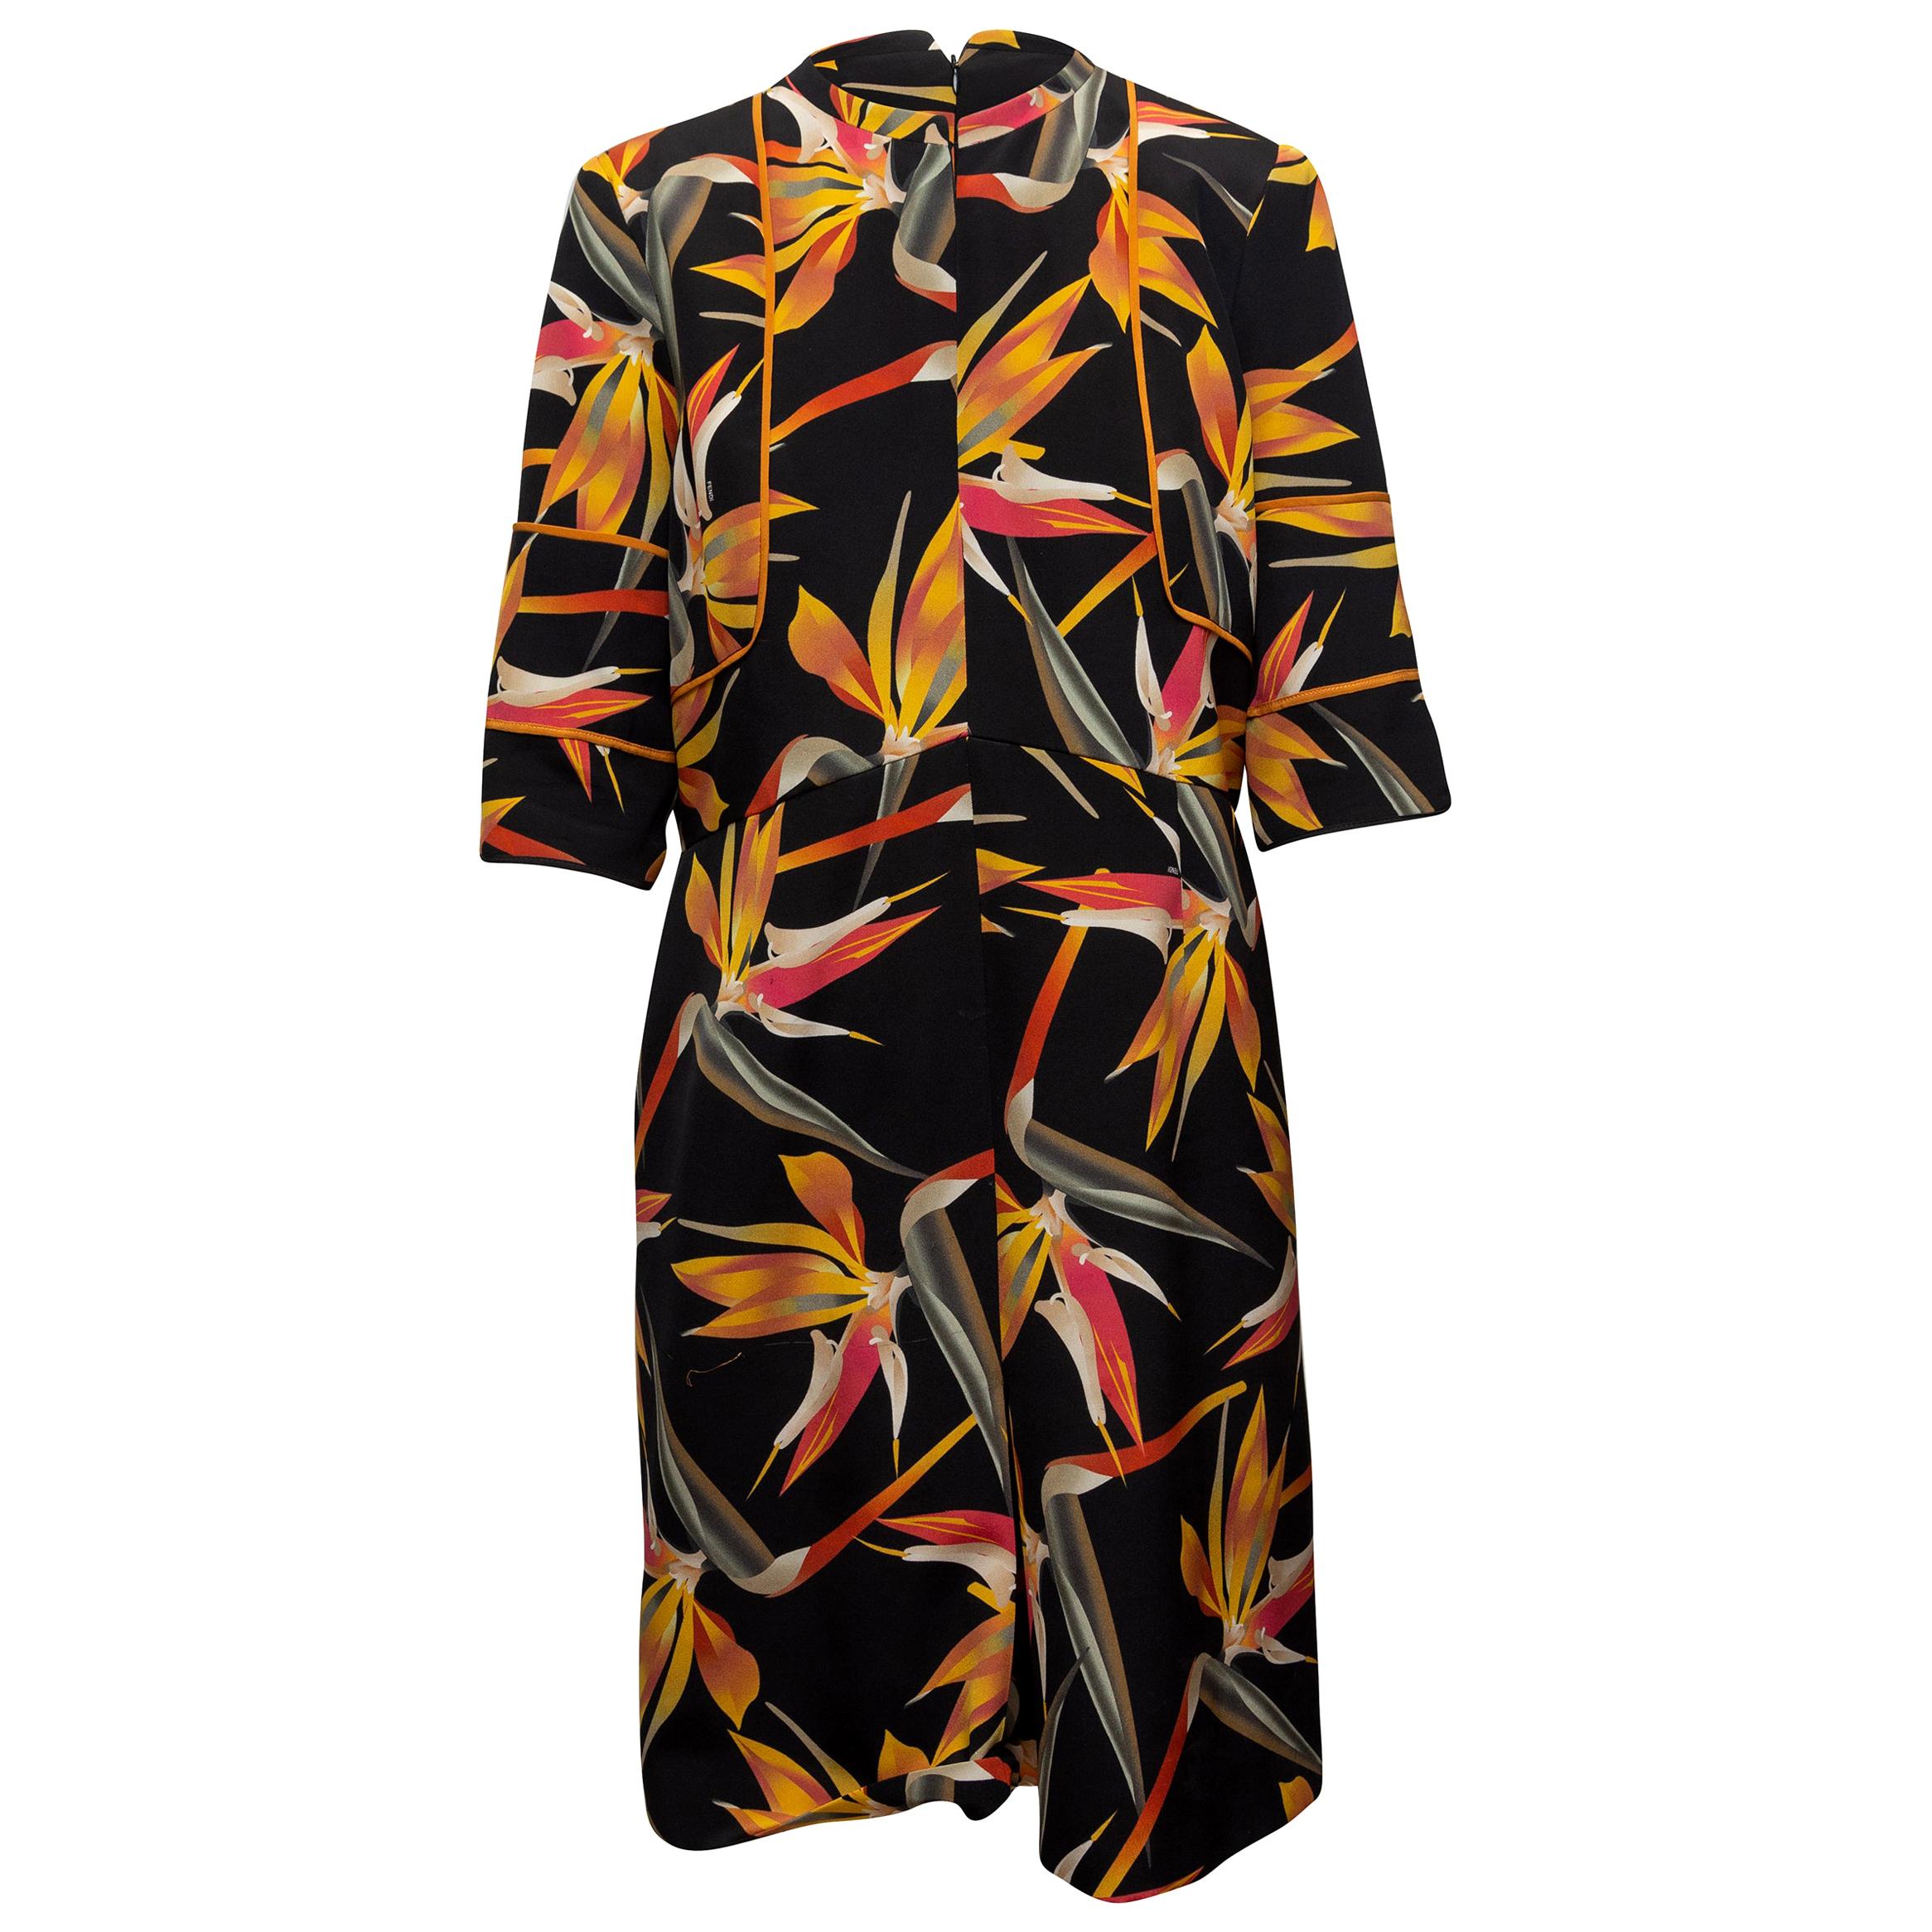 Fendi Black & Multicolor Floral Print Dress